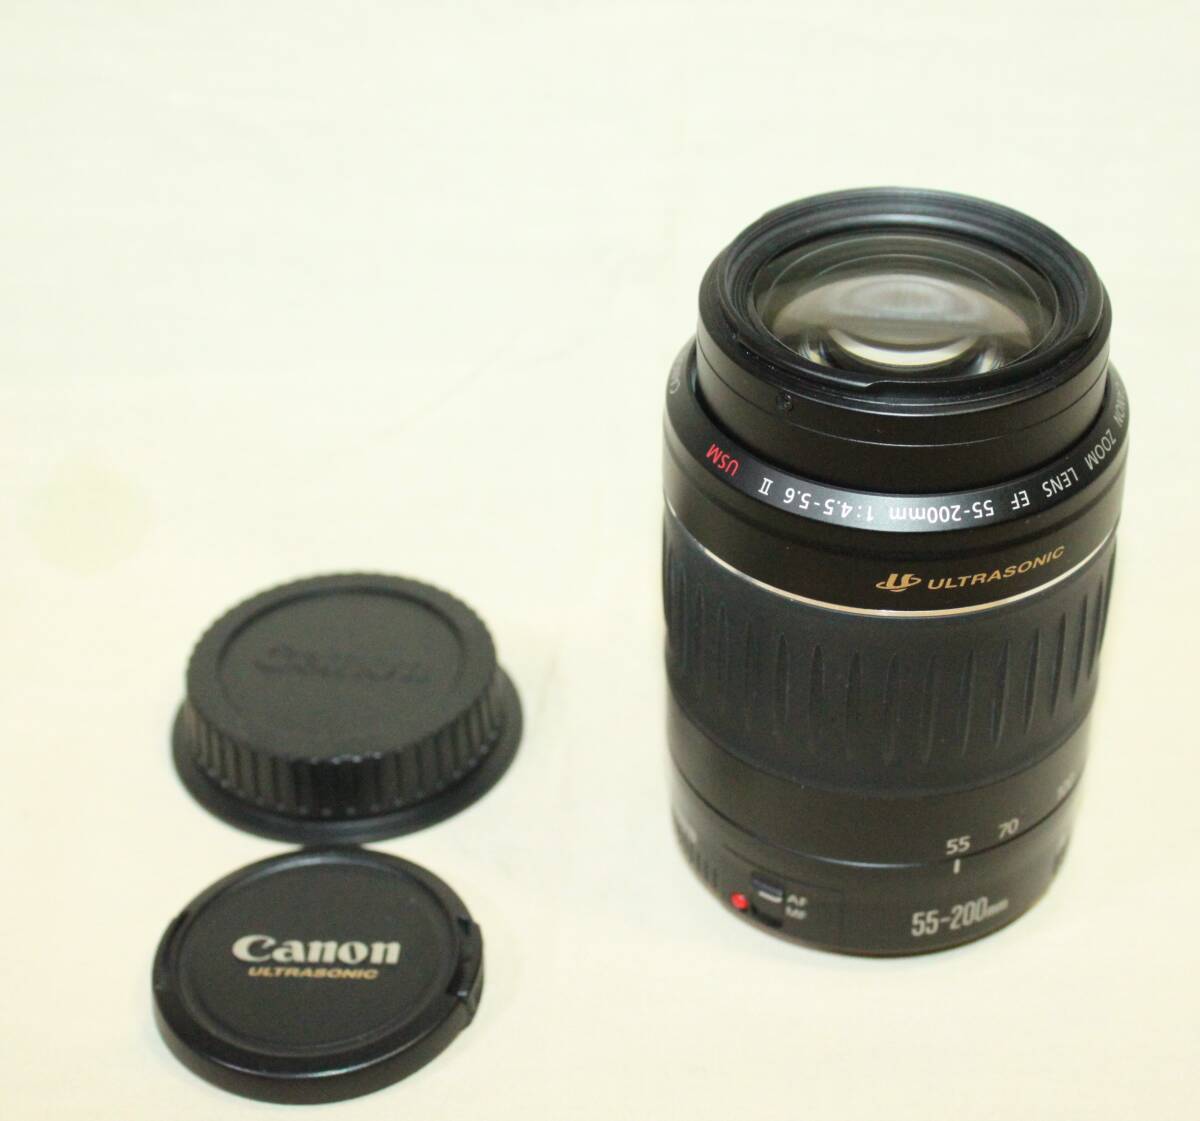 Canon キヤノン レンズ EF 55-200mm ULTRASONIC 1:4.5-5.6 II USM キャップ付き 動作確認済みの画像1